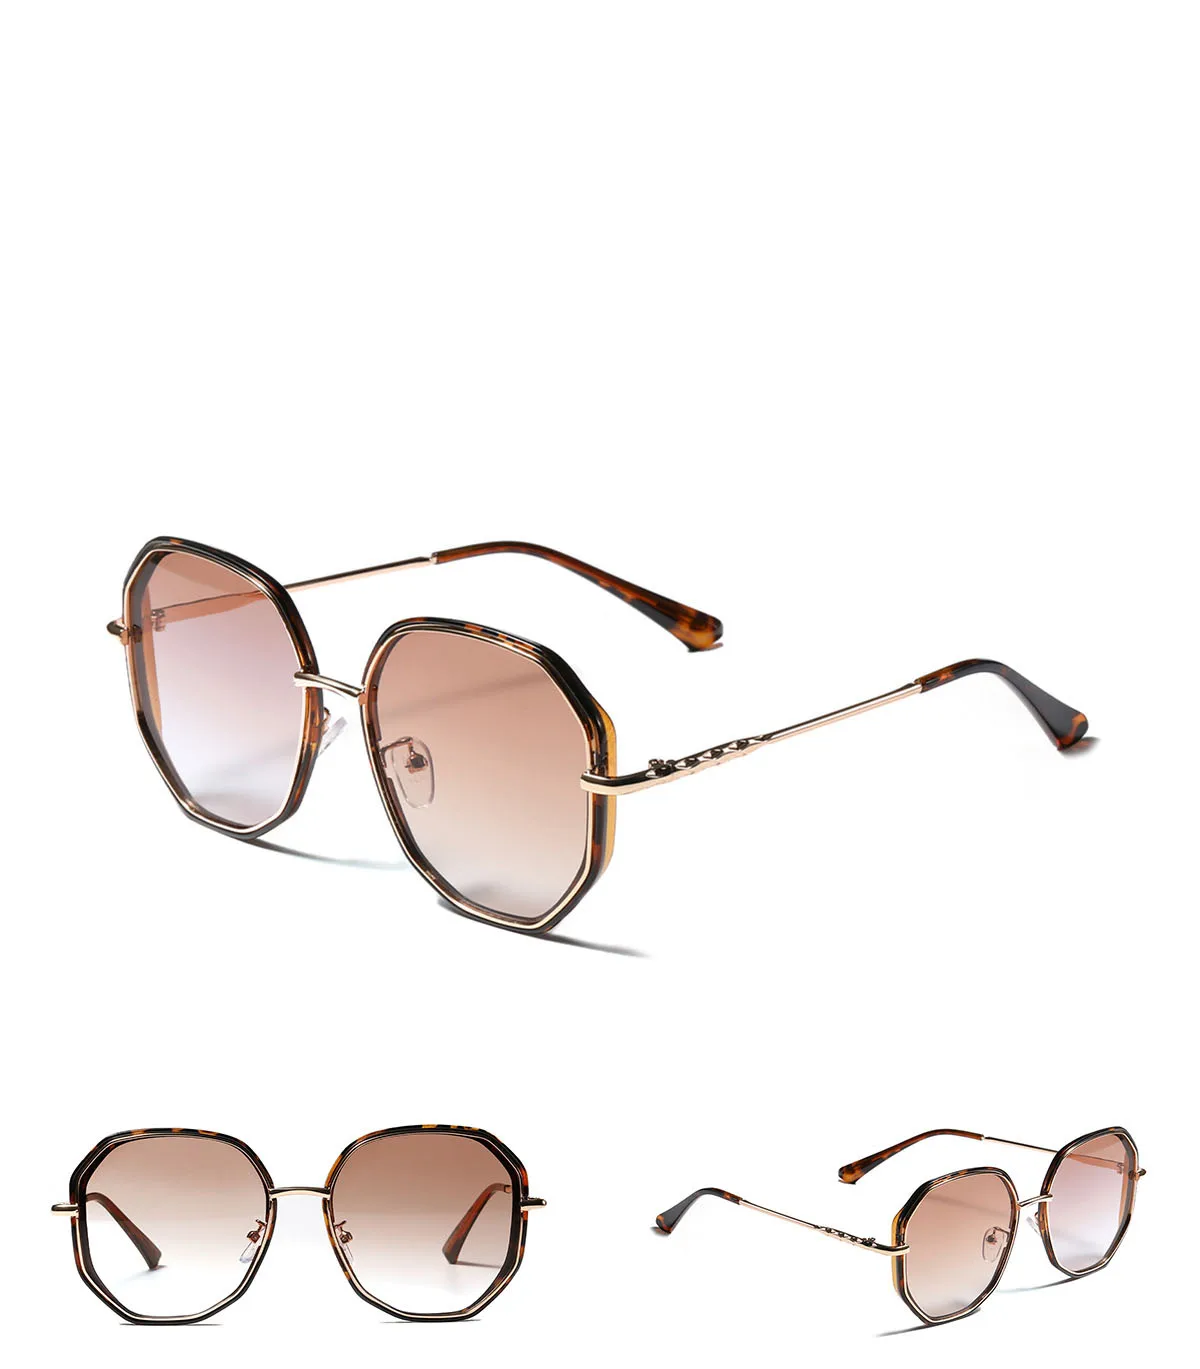 Vintage Oversized Flat Square Sunglasses For Women New Fashion Black